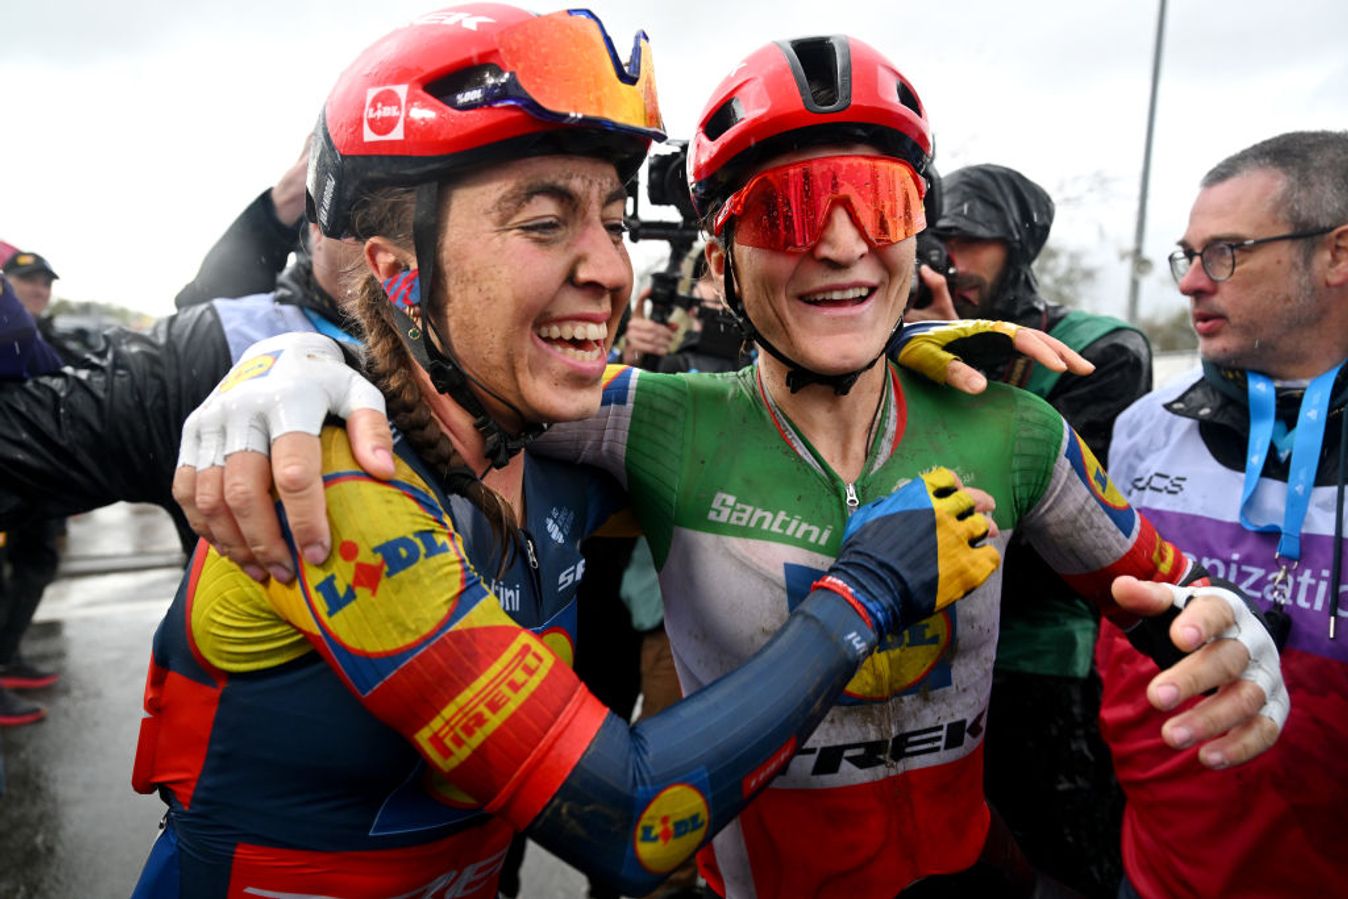 Longo Borghini (right) celebrates with Van Anrooij